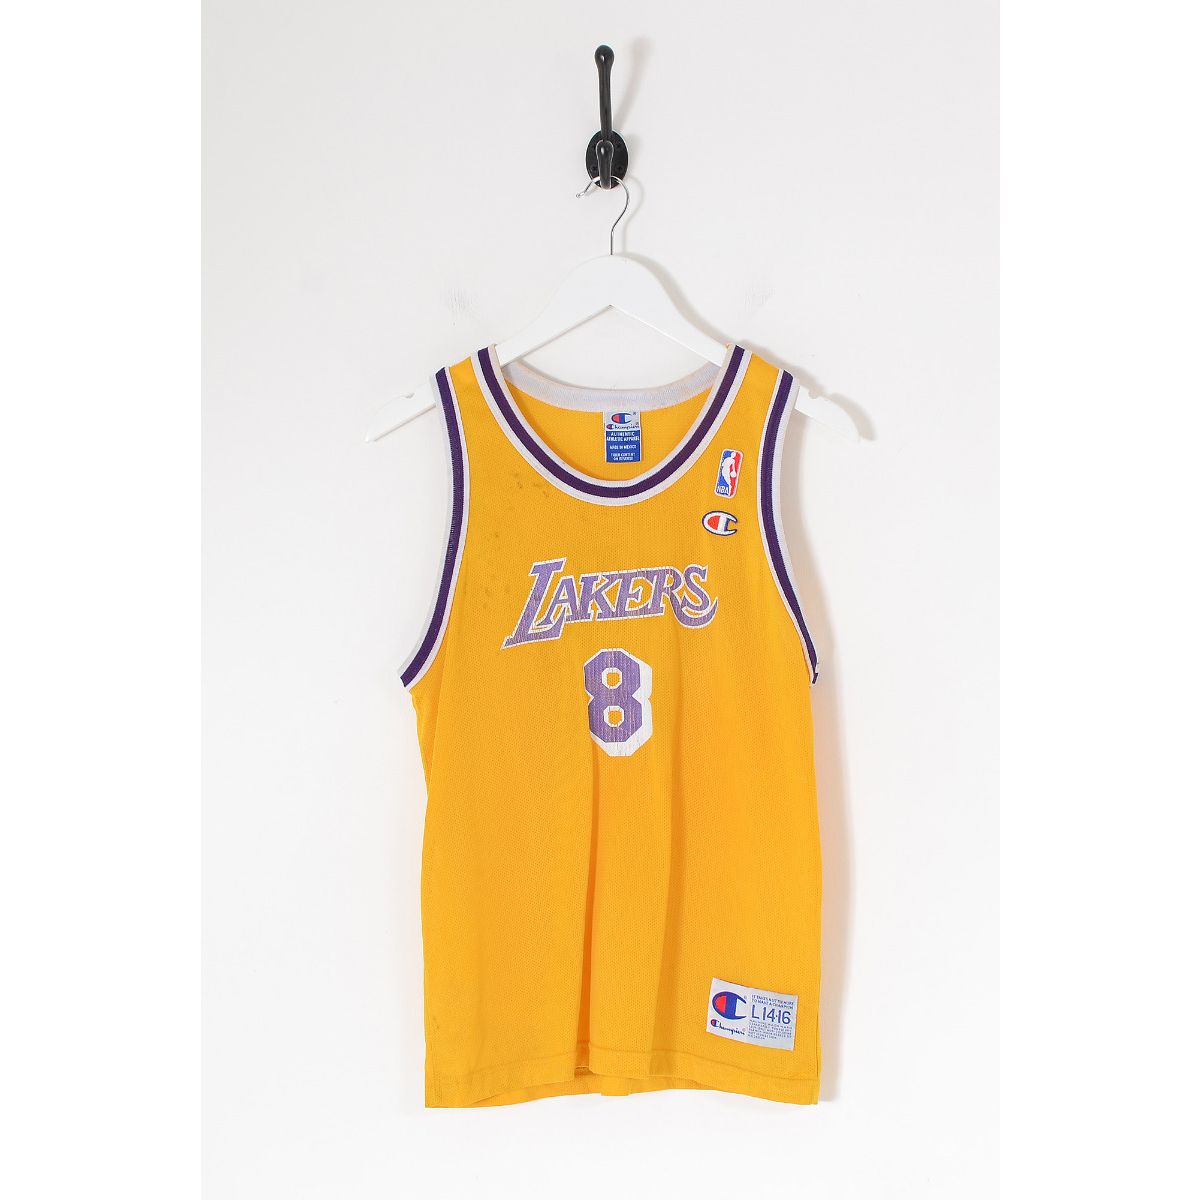 Vintage CHAMPION NBA Los Angeles Lakers Basketball Jersey Yellow